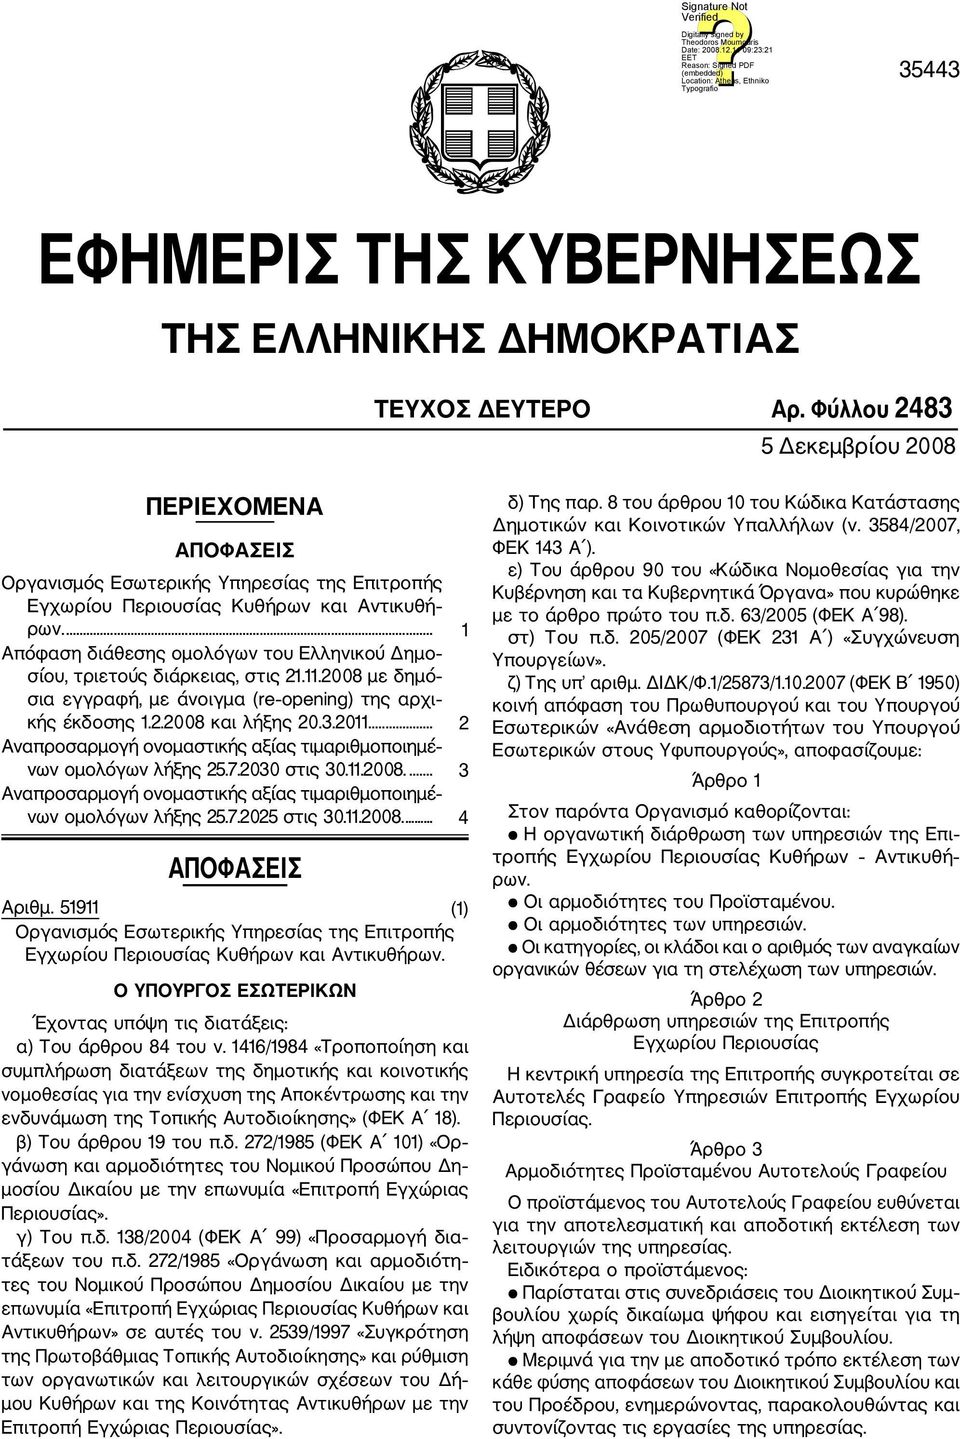 ... 1 Aπόφαση διάθεσης ομολόγων του Ελληνικού Δημο σίου, τριετούς διάρκειας, στις 21.11.2008 με δημό σια εγγραφή, με άνοιγμα (re opening) της αρχι κής έκδοσης 1.2.2008 και λήξης 20.3.2011.